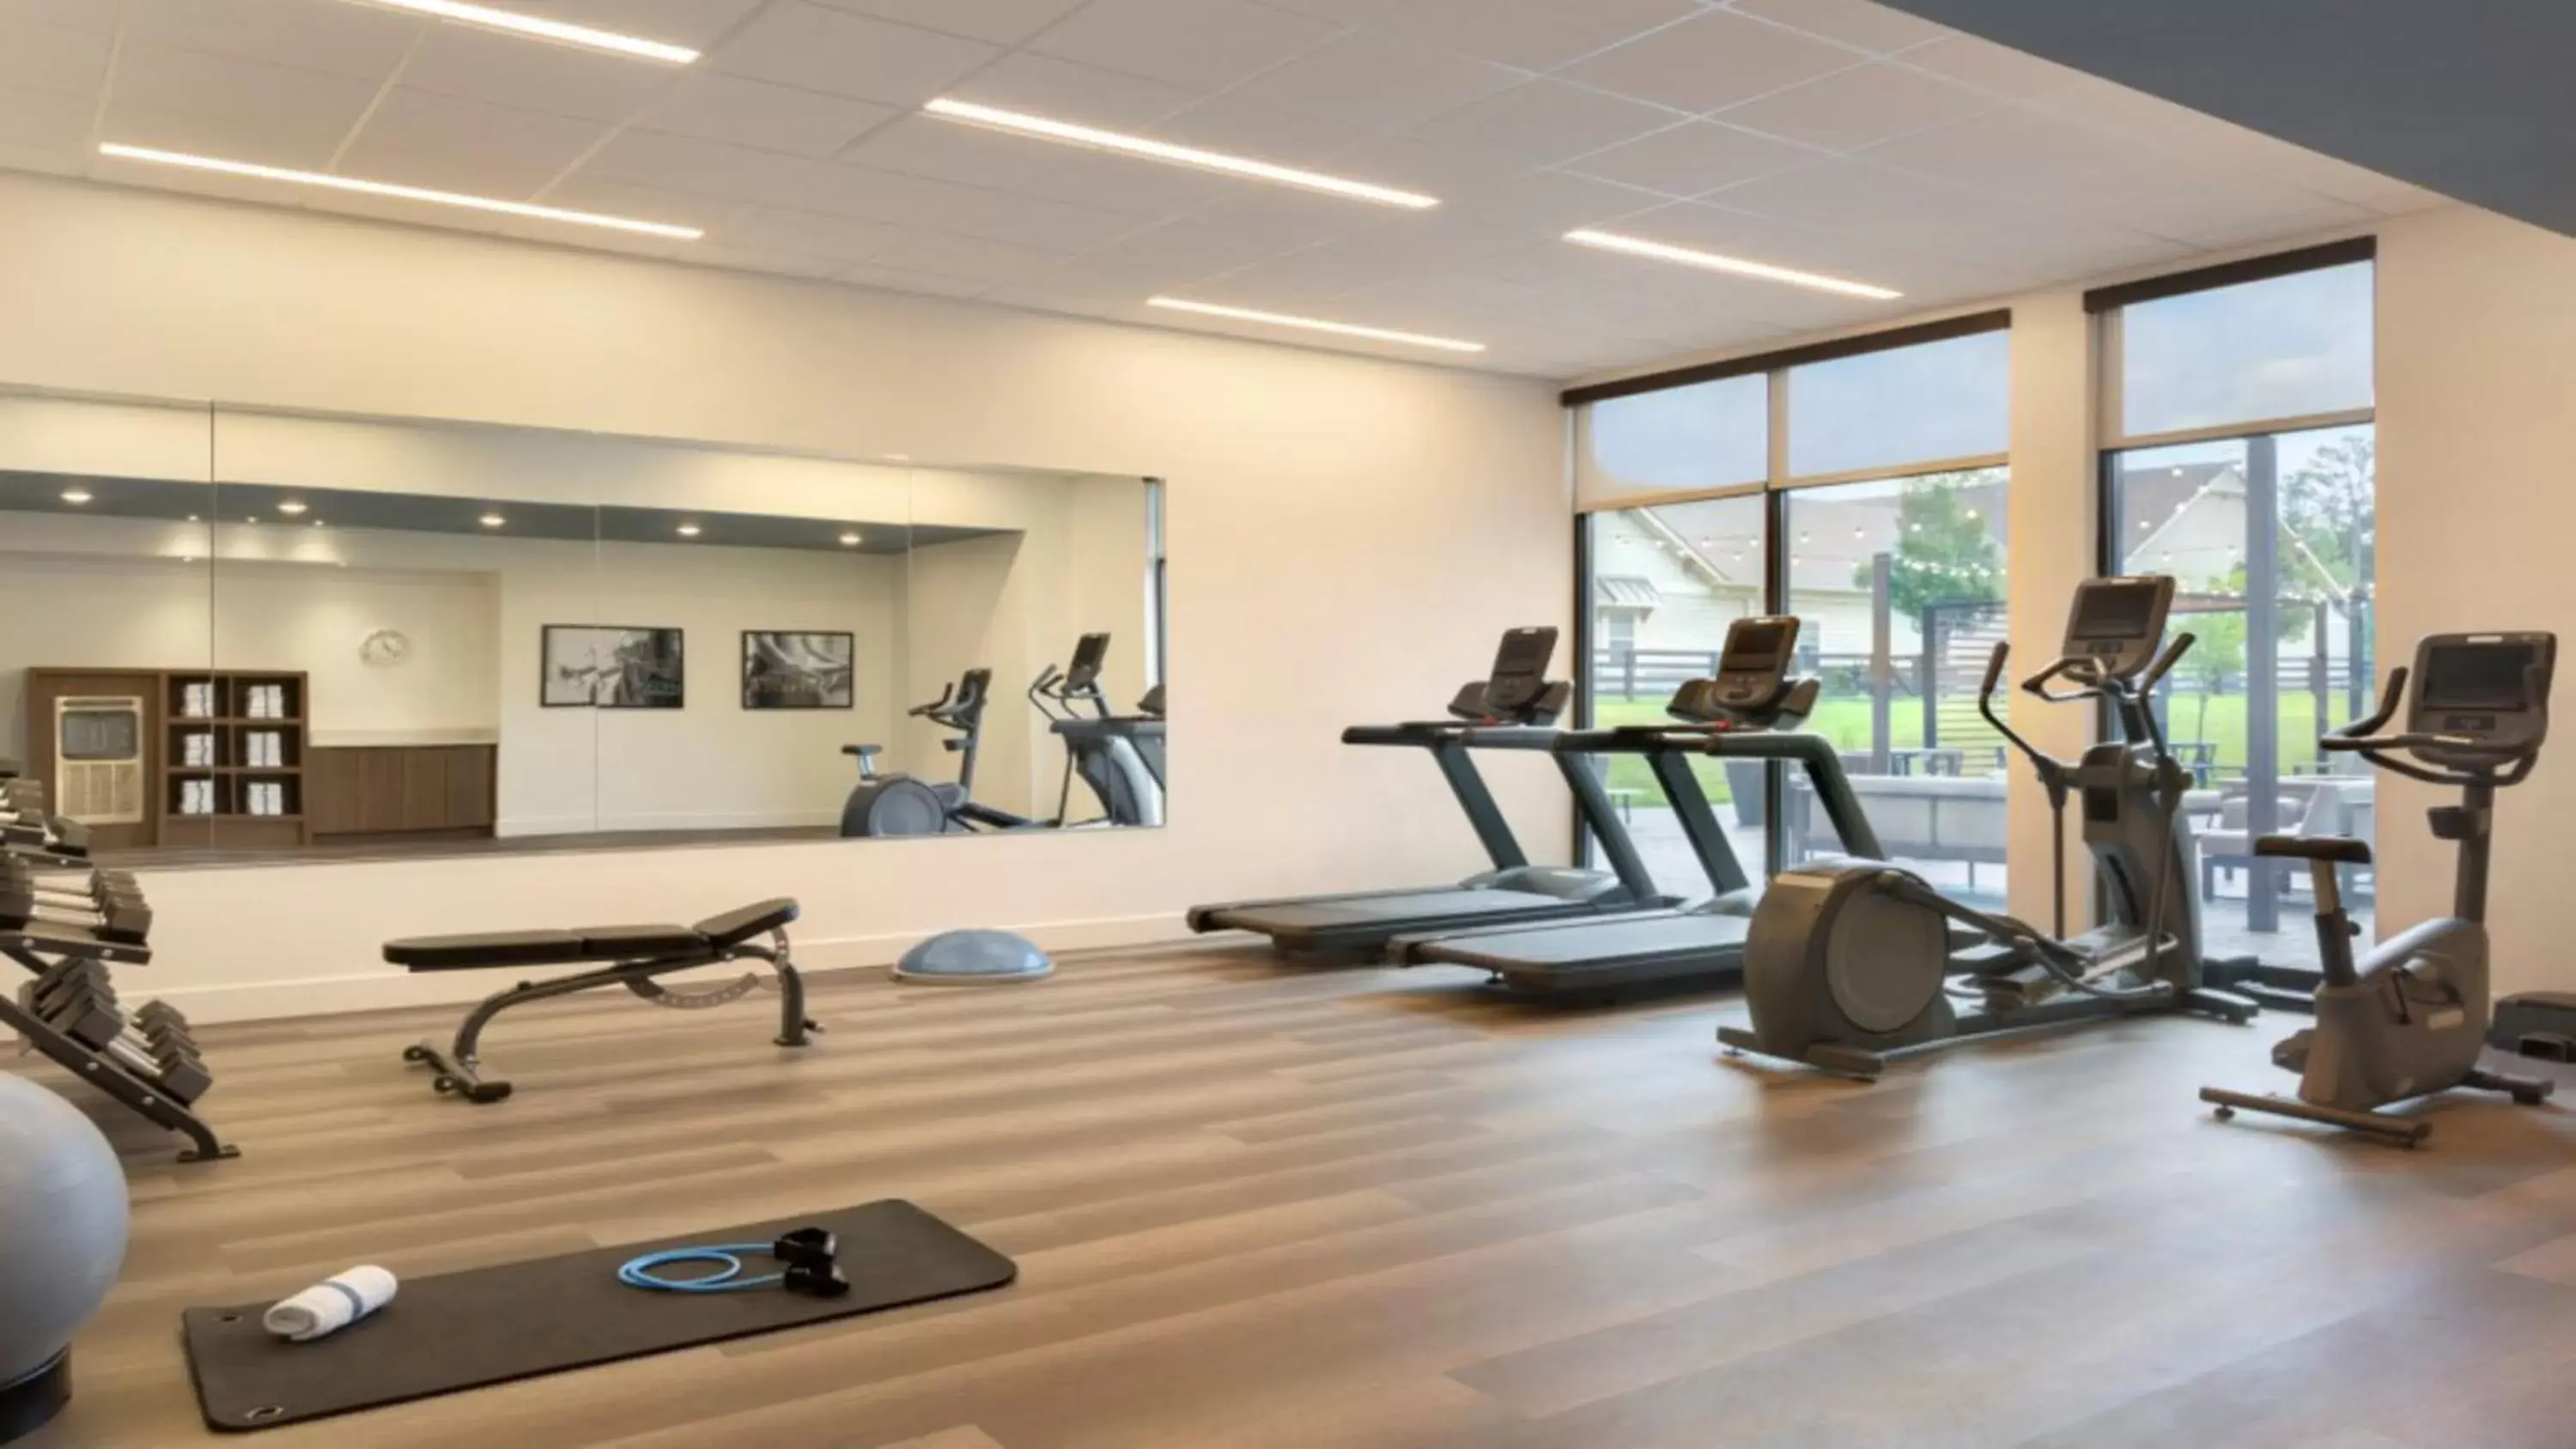 Fitness centre/facilities, Fitness Center/Facilities in Staybridge Suites - Lexington S Medical Ctr Area, an IHG Hotel